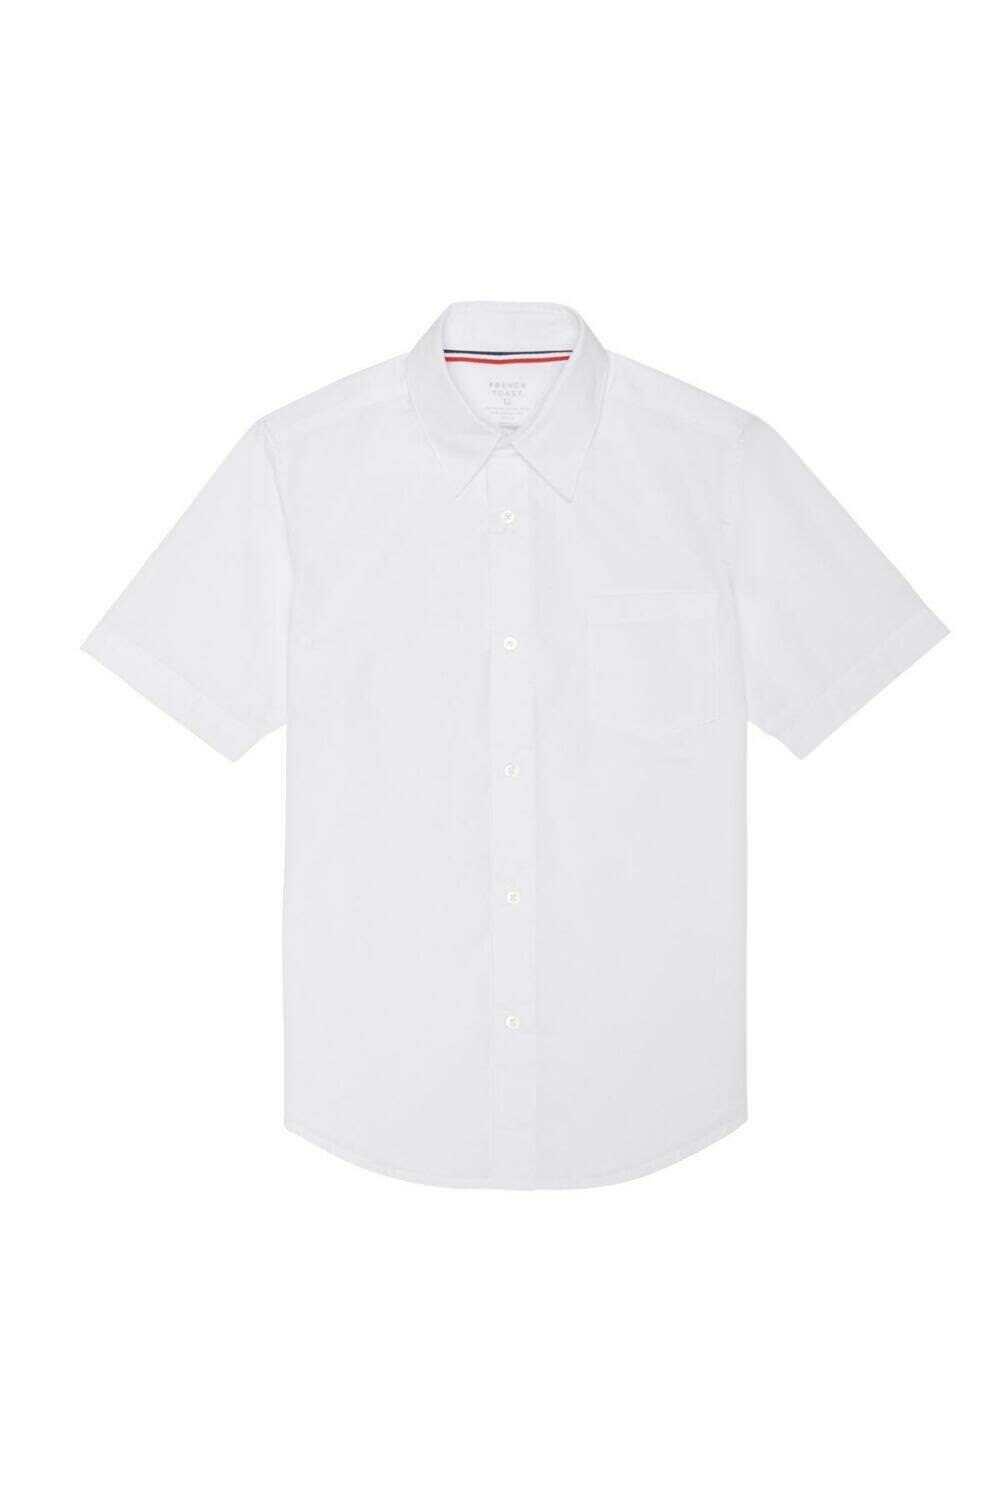 Boys Girls White Broadcloth Shirt French Toast Short Sleeve Uniform Size 4 To 20